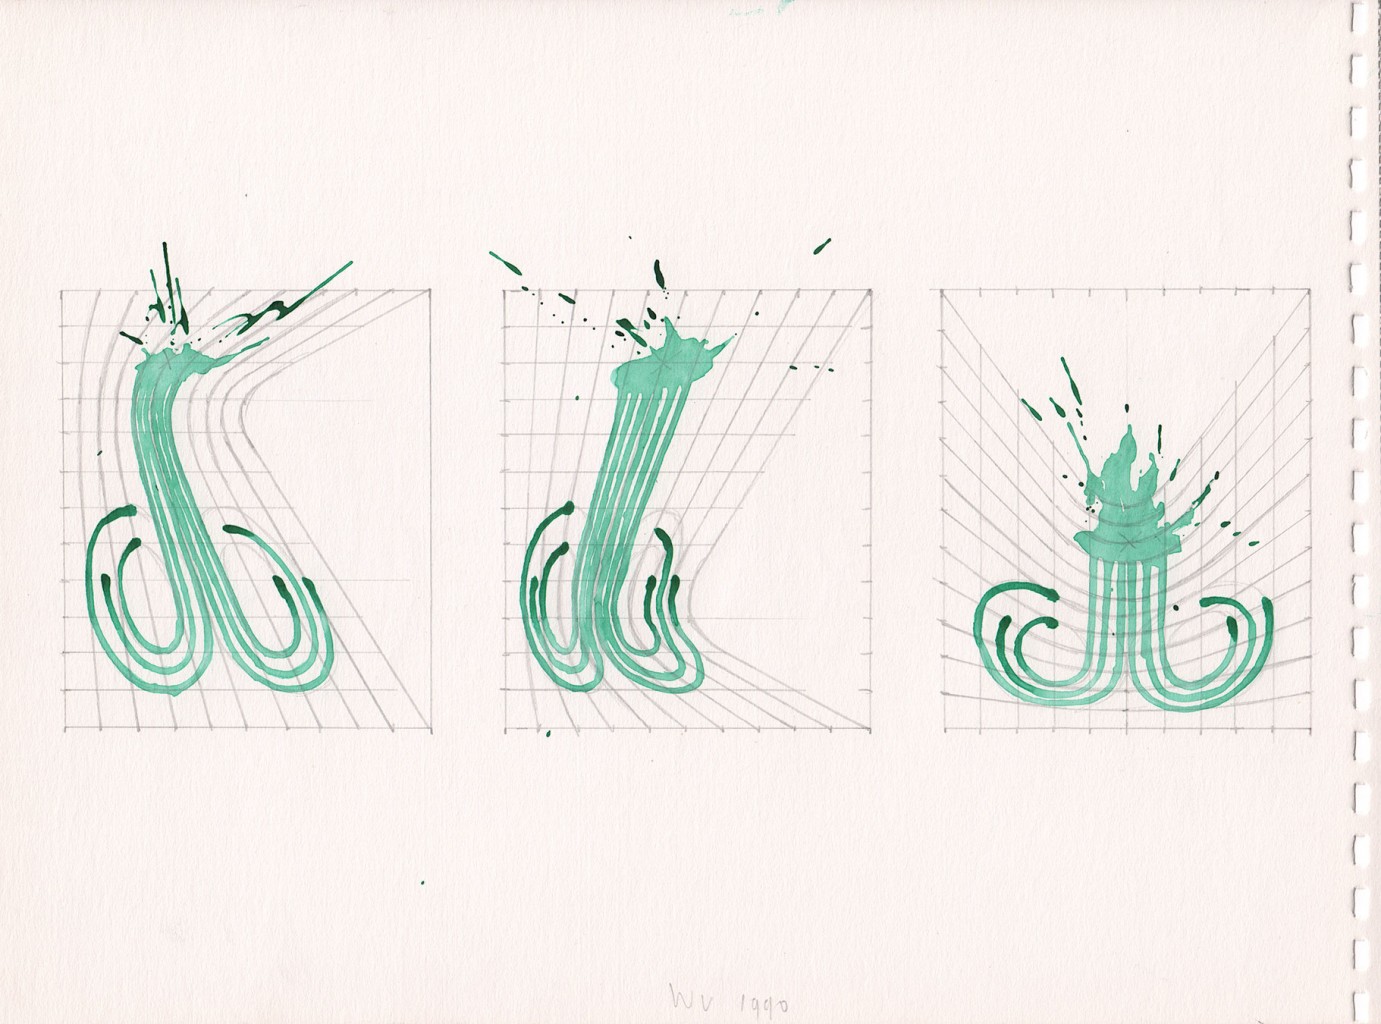 Sketchbook 1990  28,1 x 37,9 cm  14 pages  33 drawings